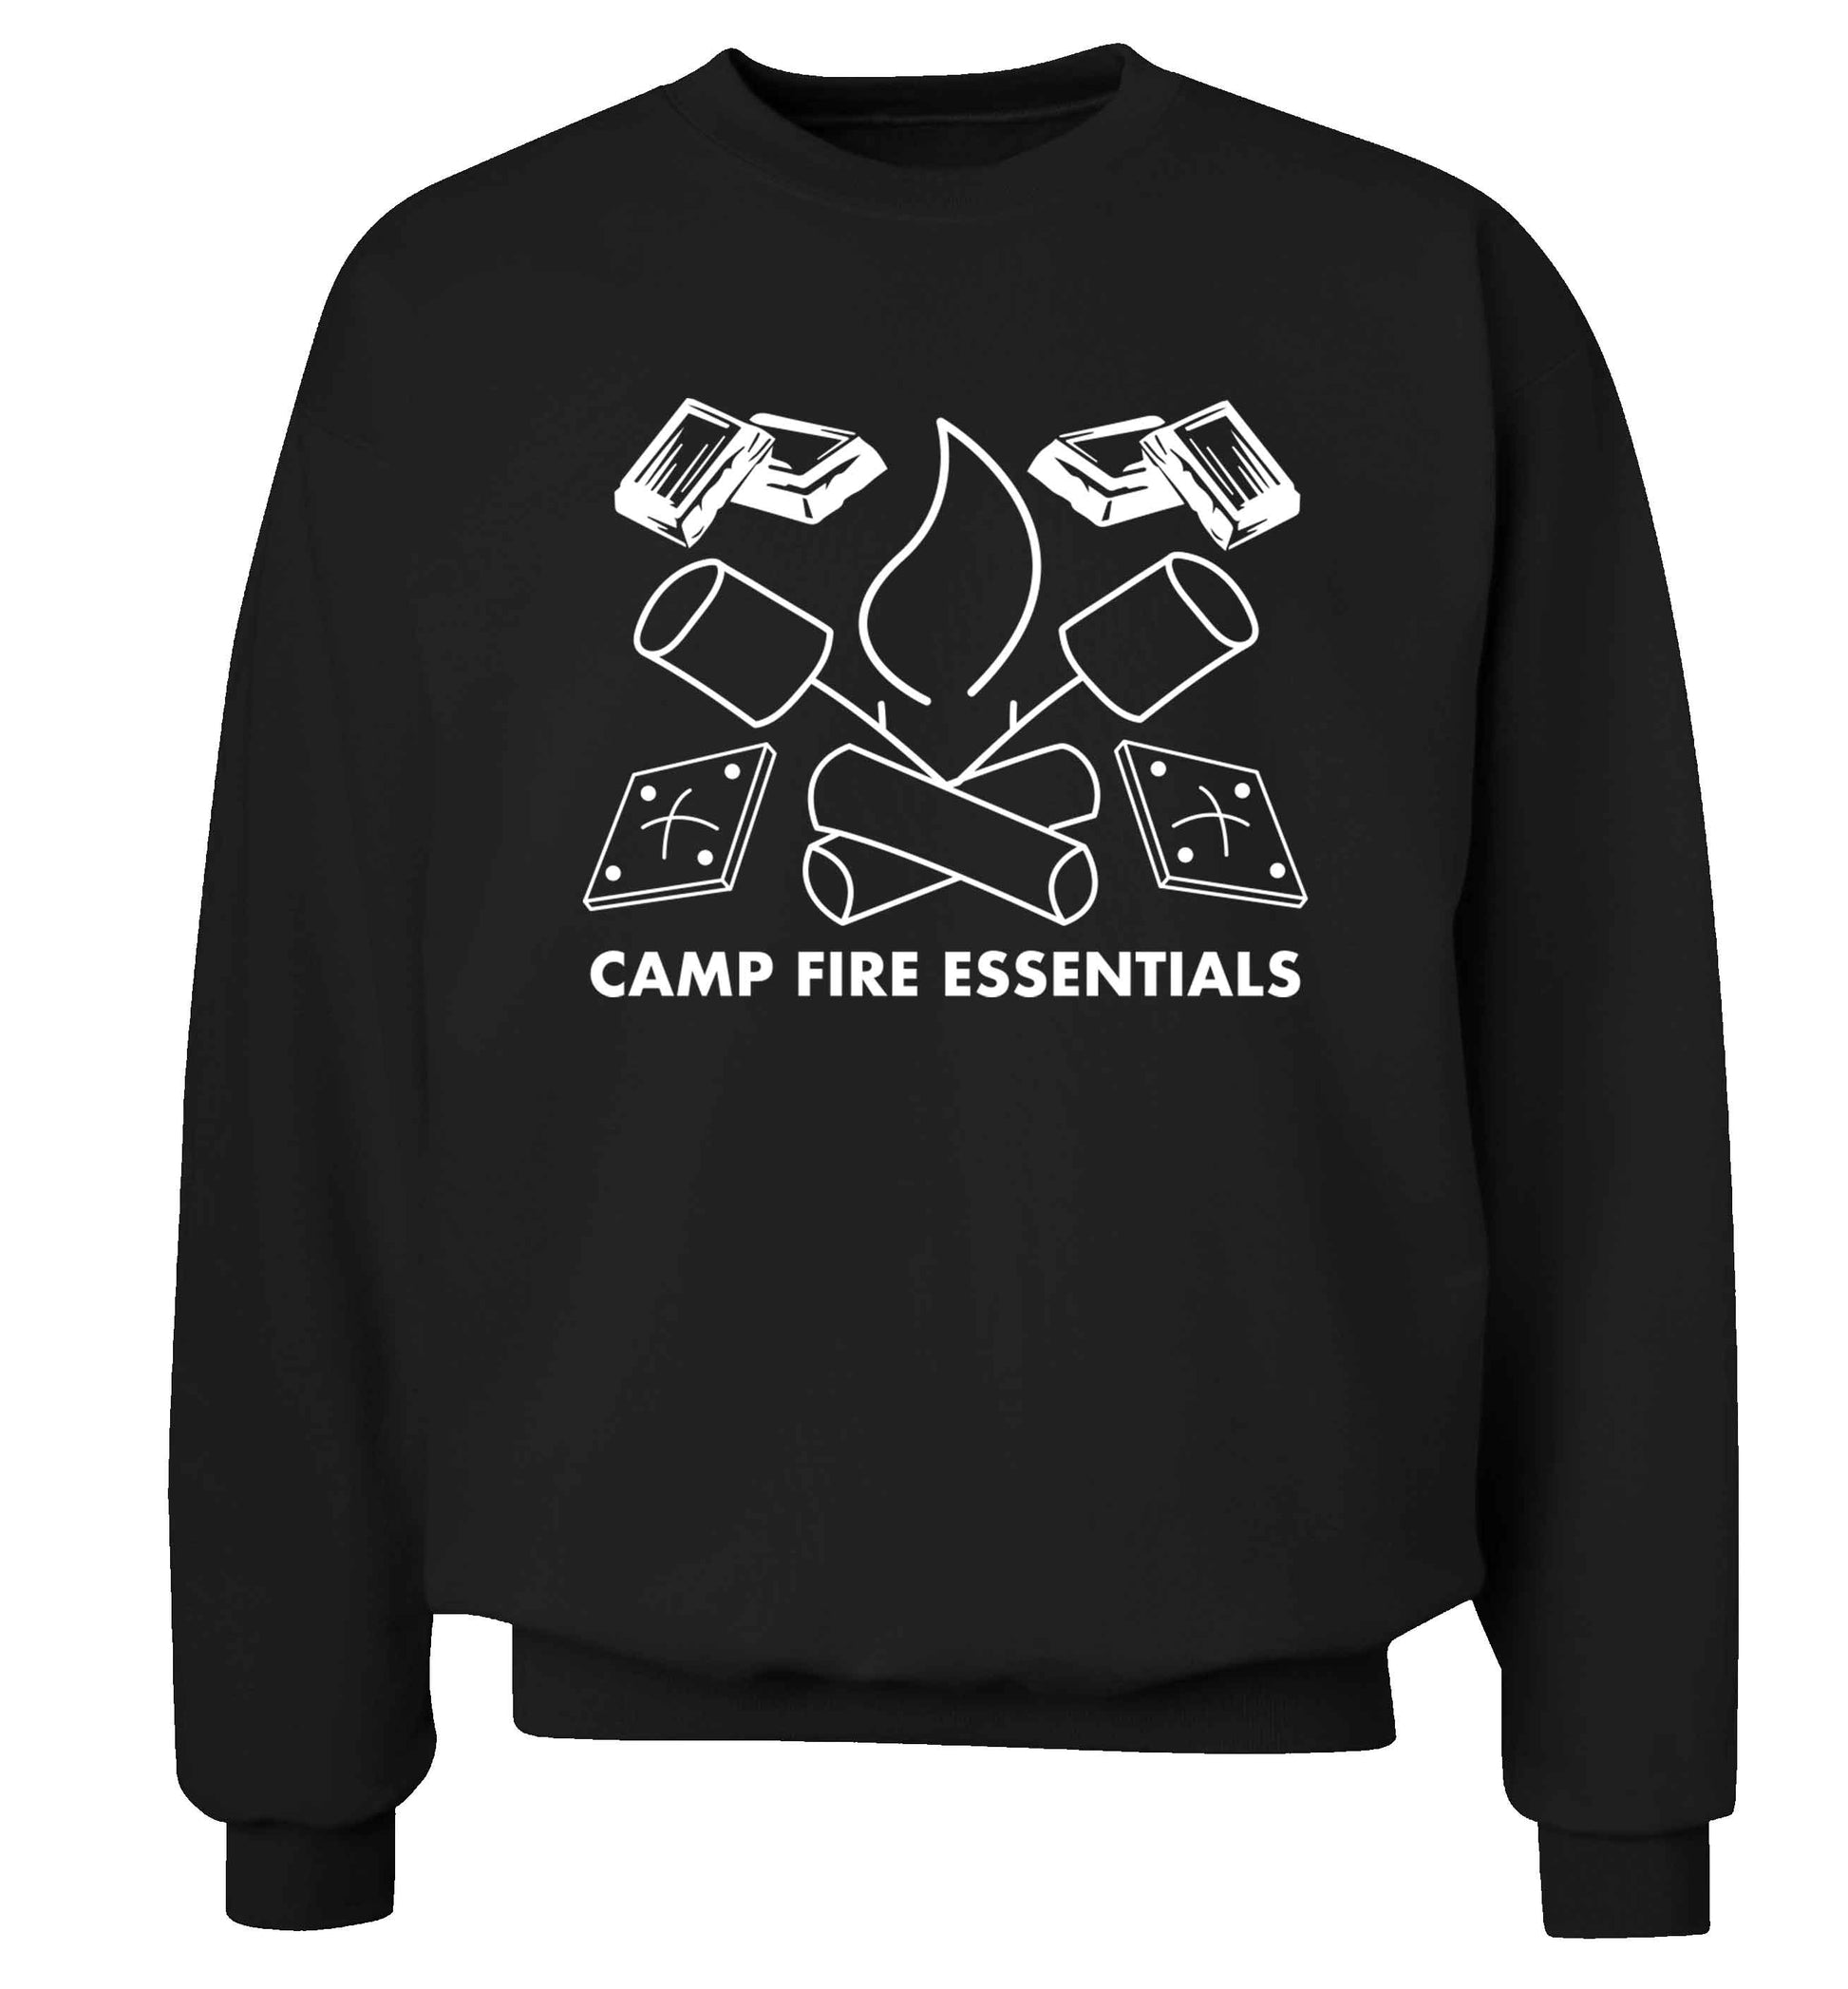 Campfire essentials Adult's unisex black Sweater 2XL